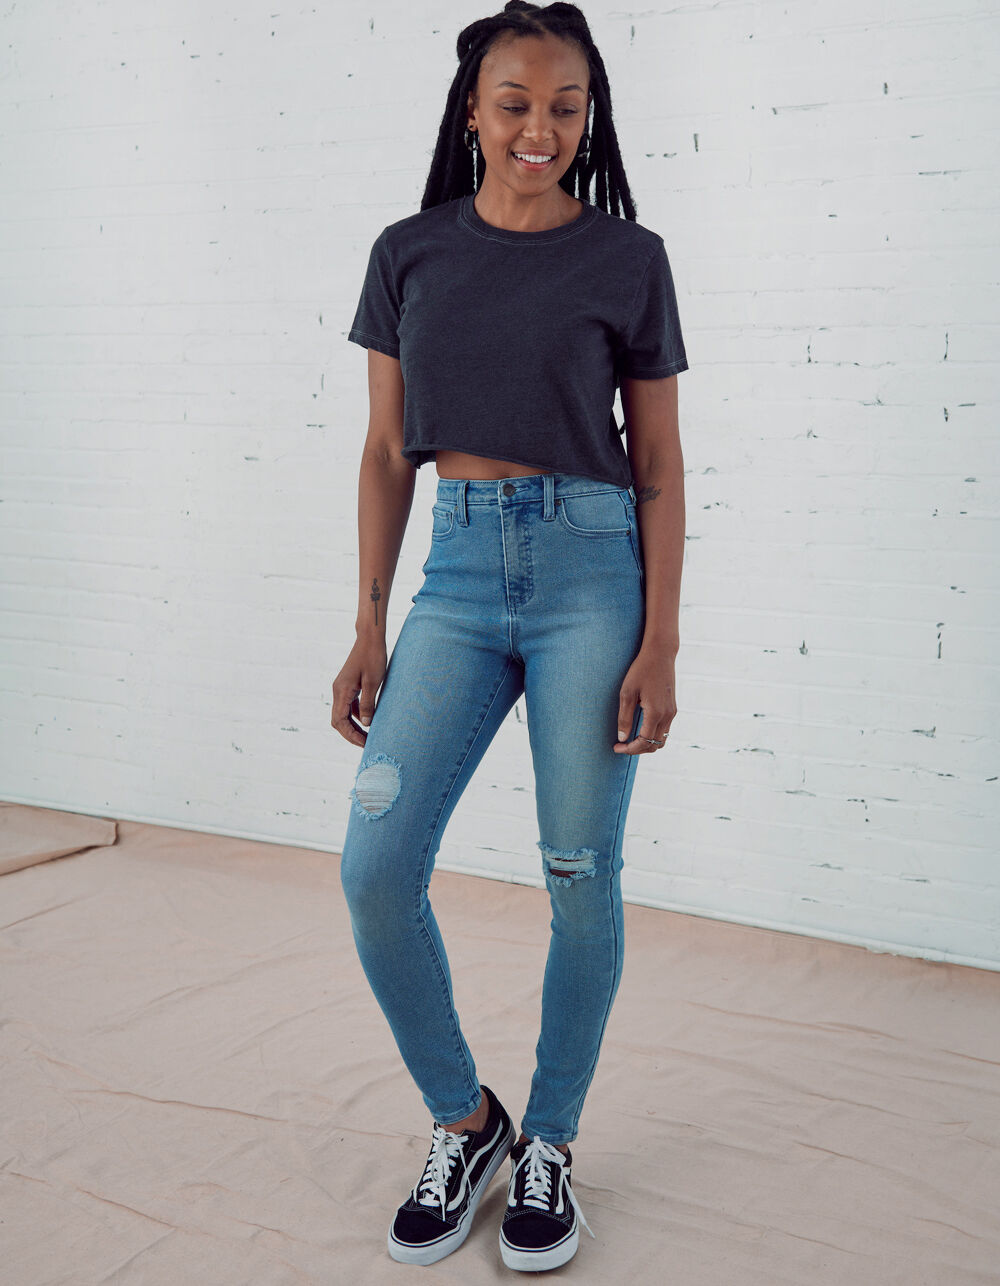 Women's Mid-Rise Skinny Jeans - Universal Thread™ Light Denim 0 Long